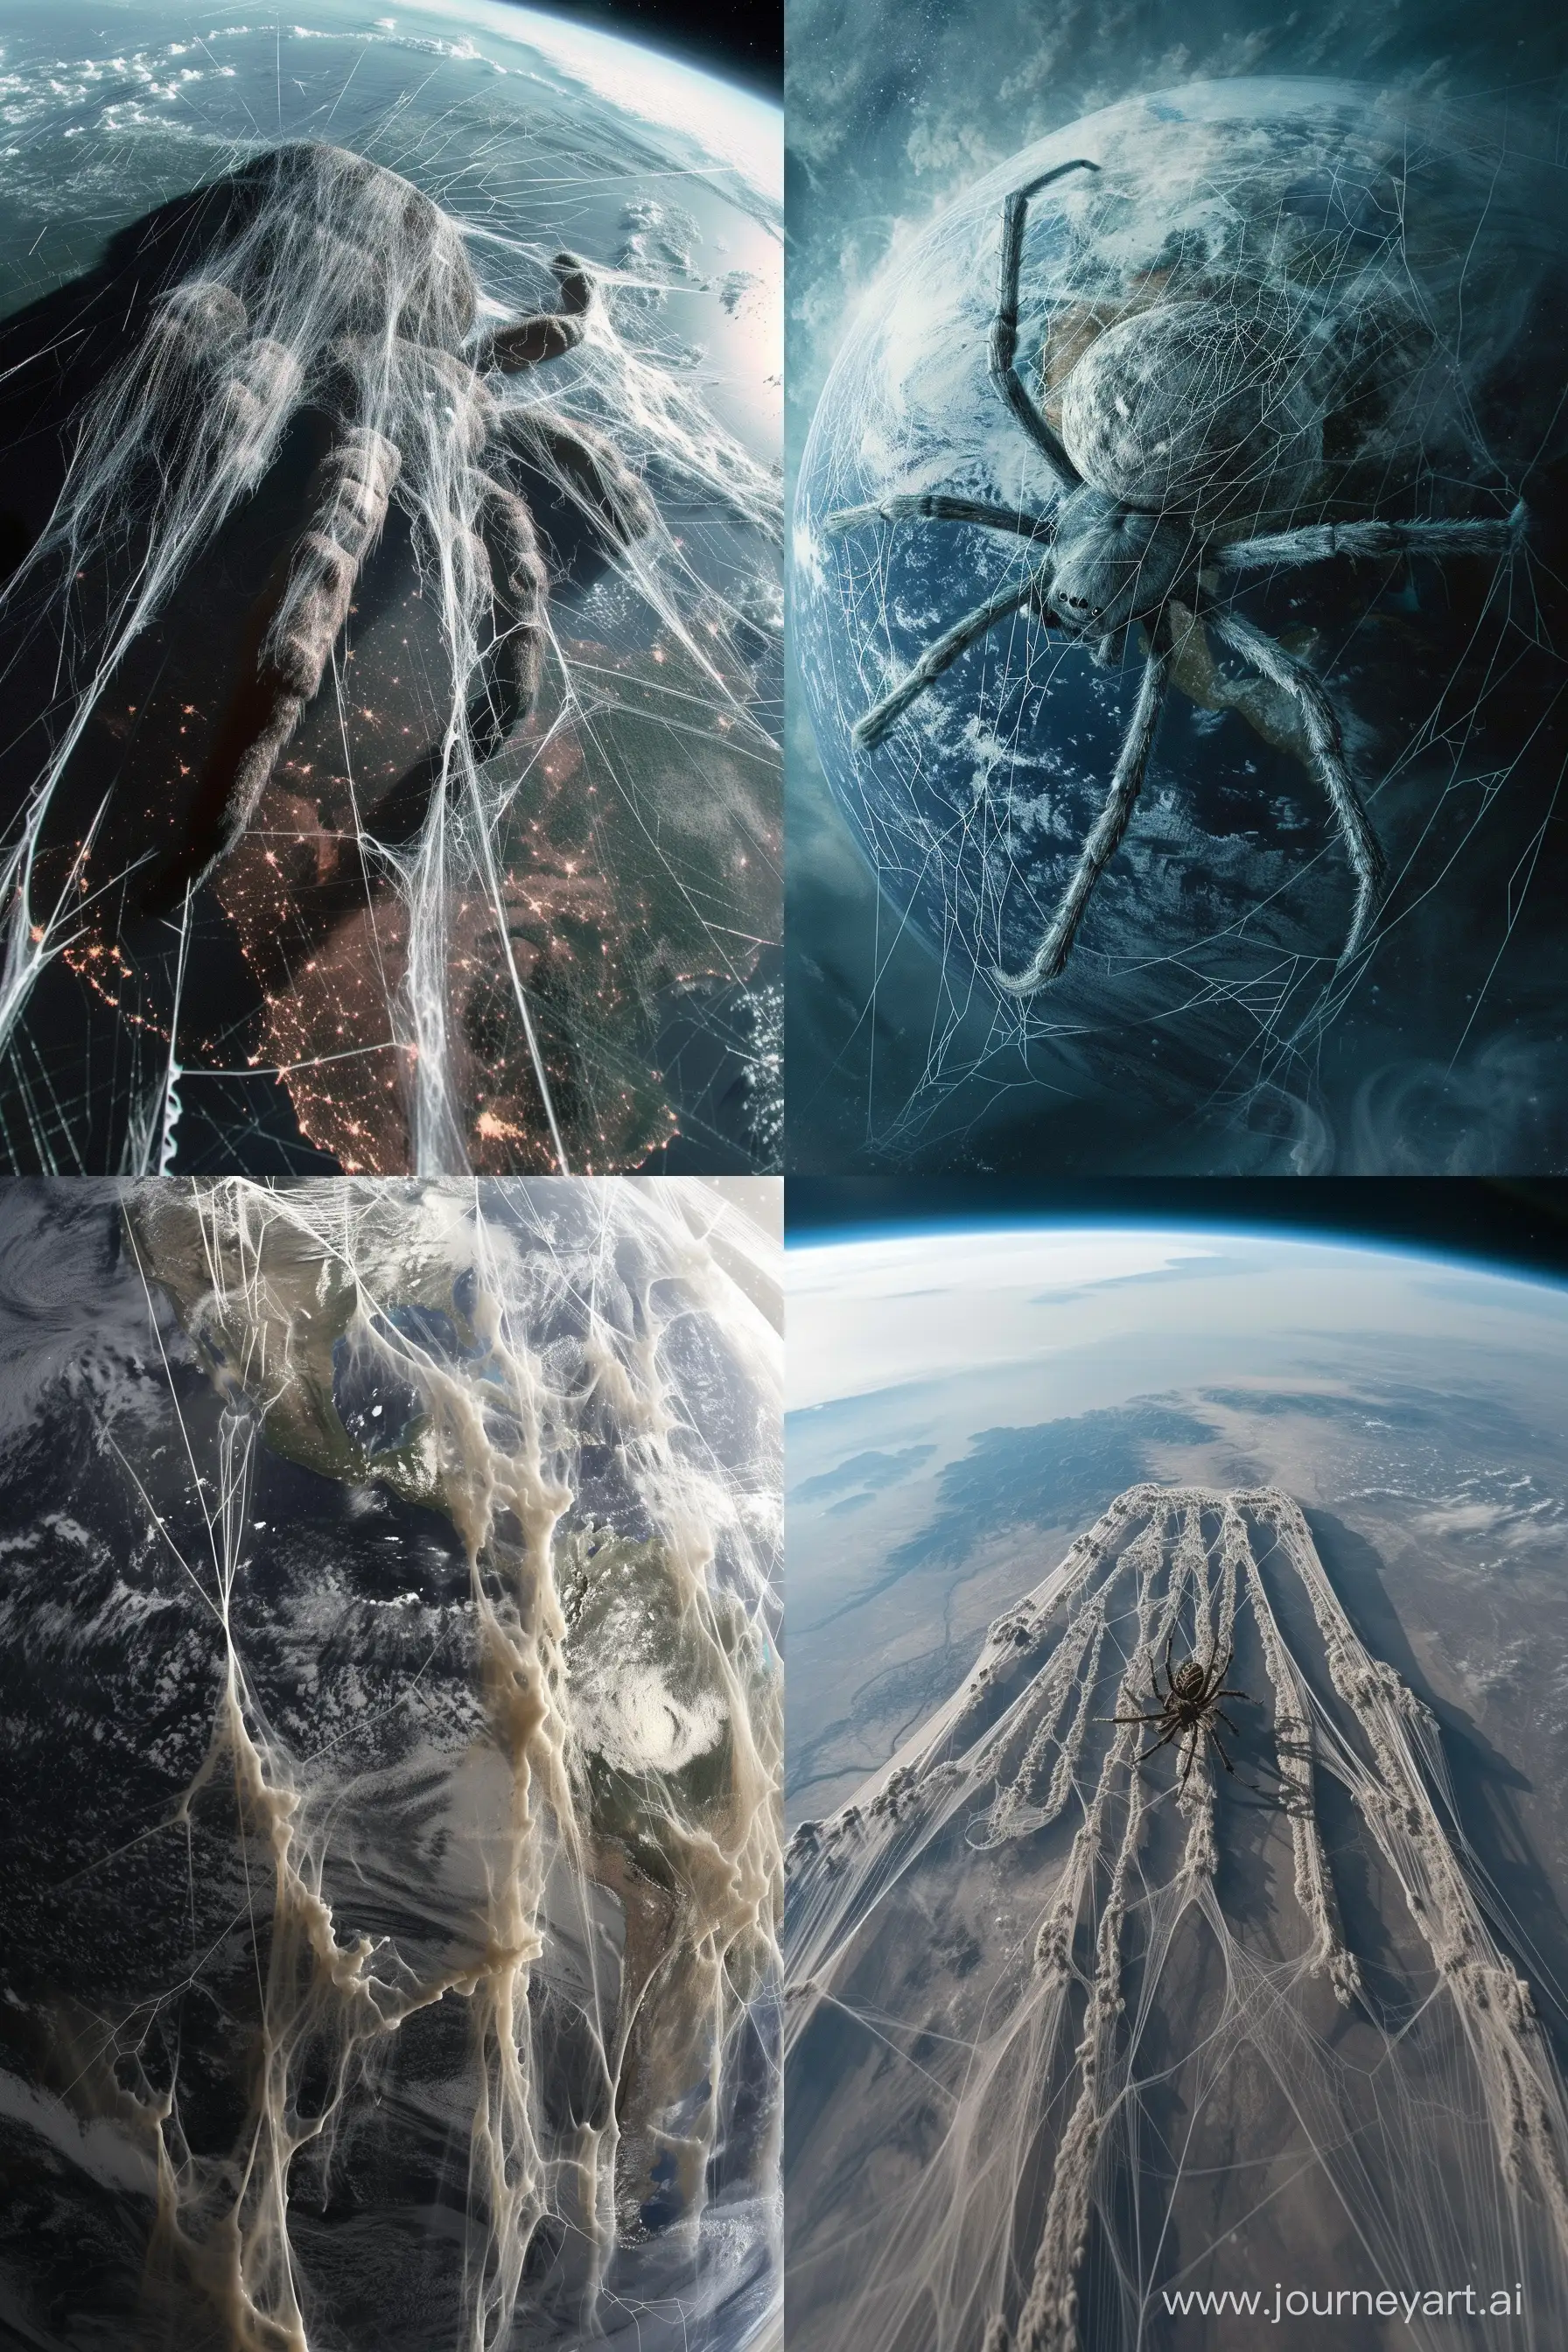 Menacing-Spider-Weaves-Ethereal-Web-Across-Earth-Aerial-View-Satellite-Image